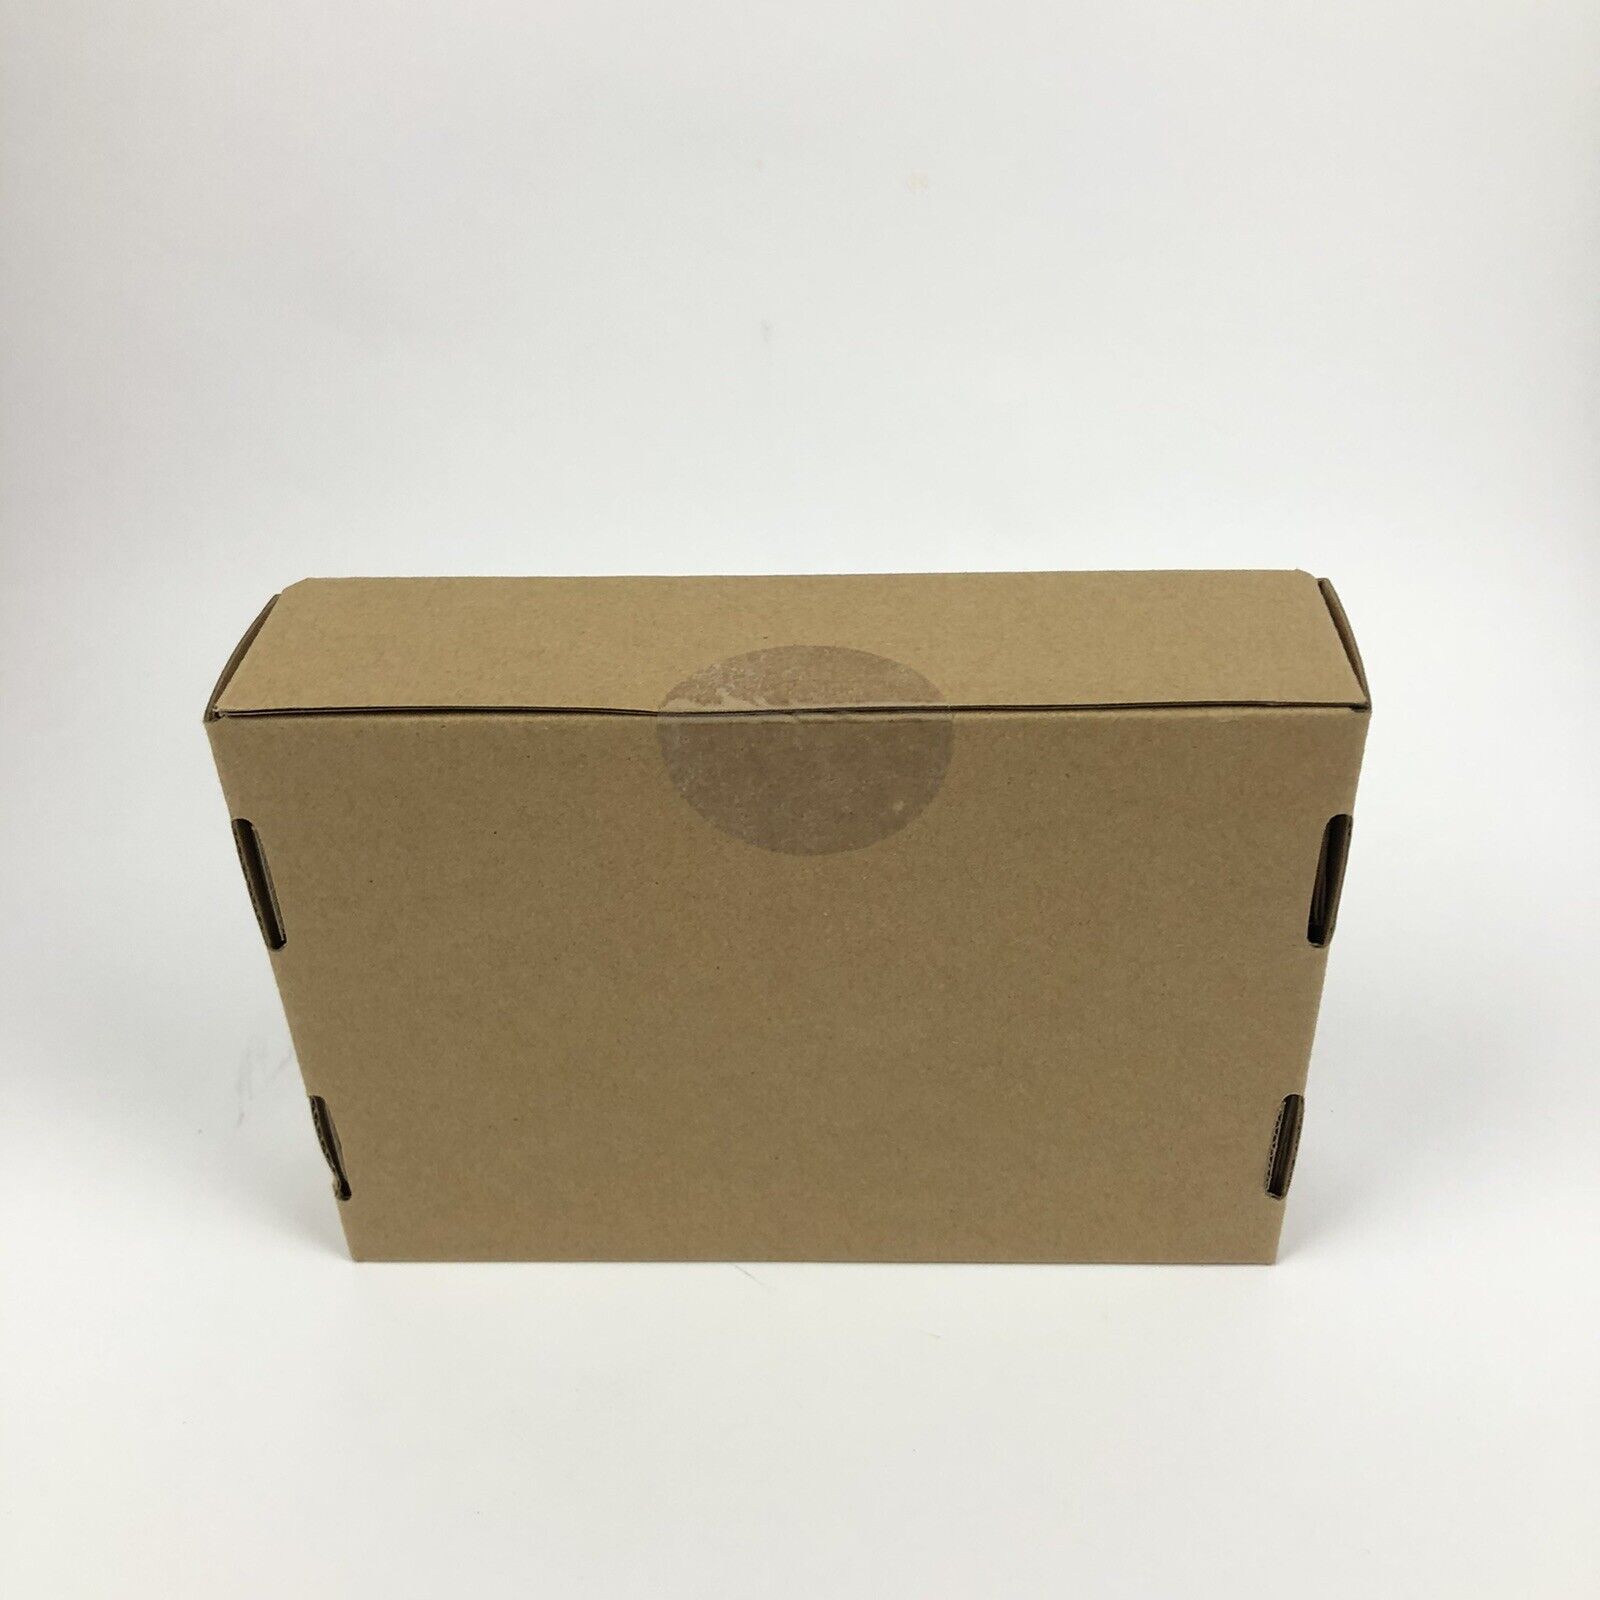 2 Google Fiber Jacks & Base GFLT110 NEW IN BOX SEALED From Manufacturer Google Fiber 86003010-07 - фотография #9